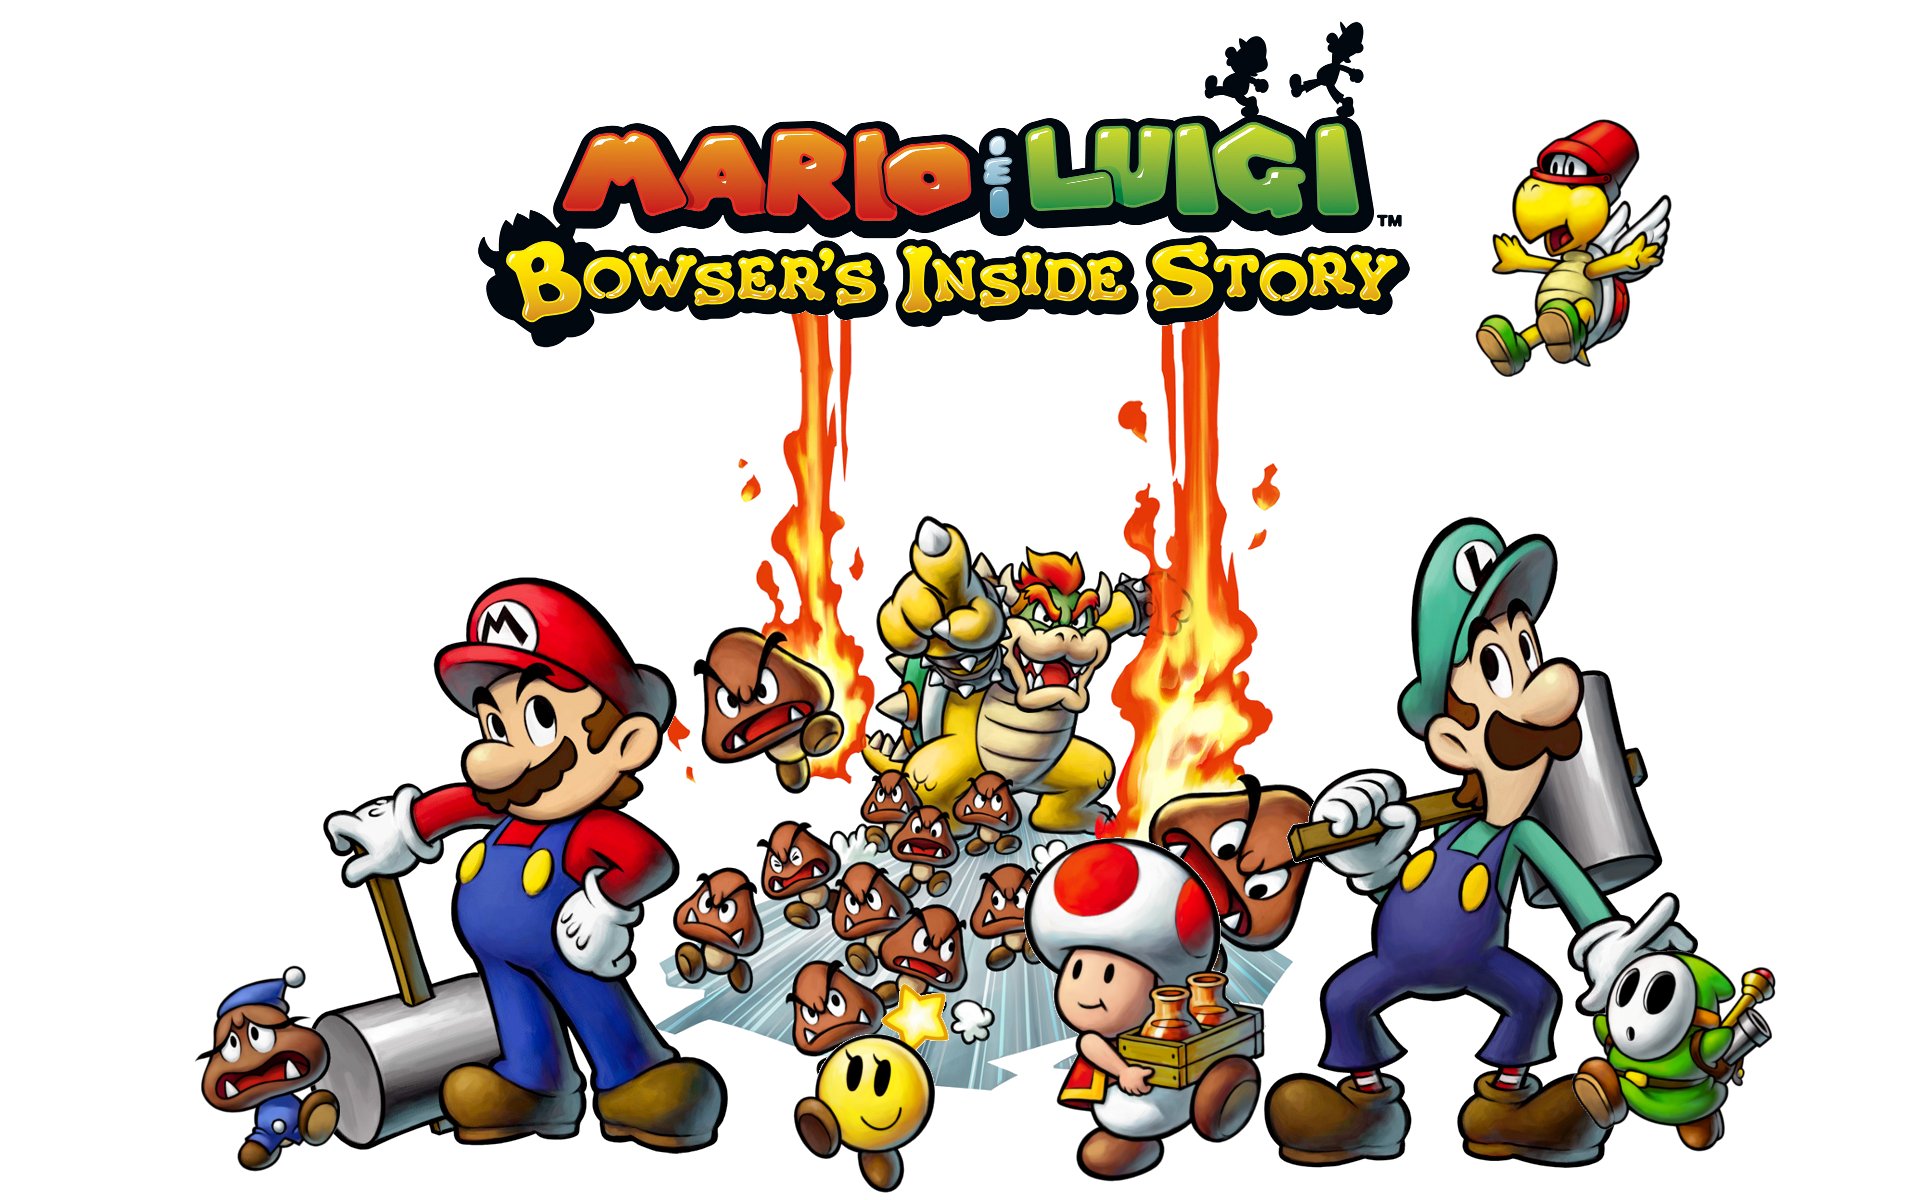 Mario and Luigi Bowser's inside story